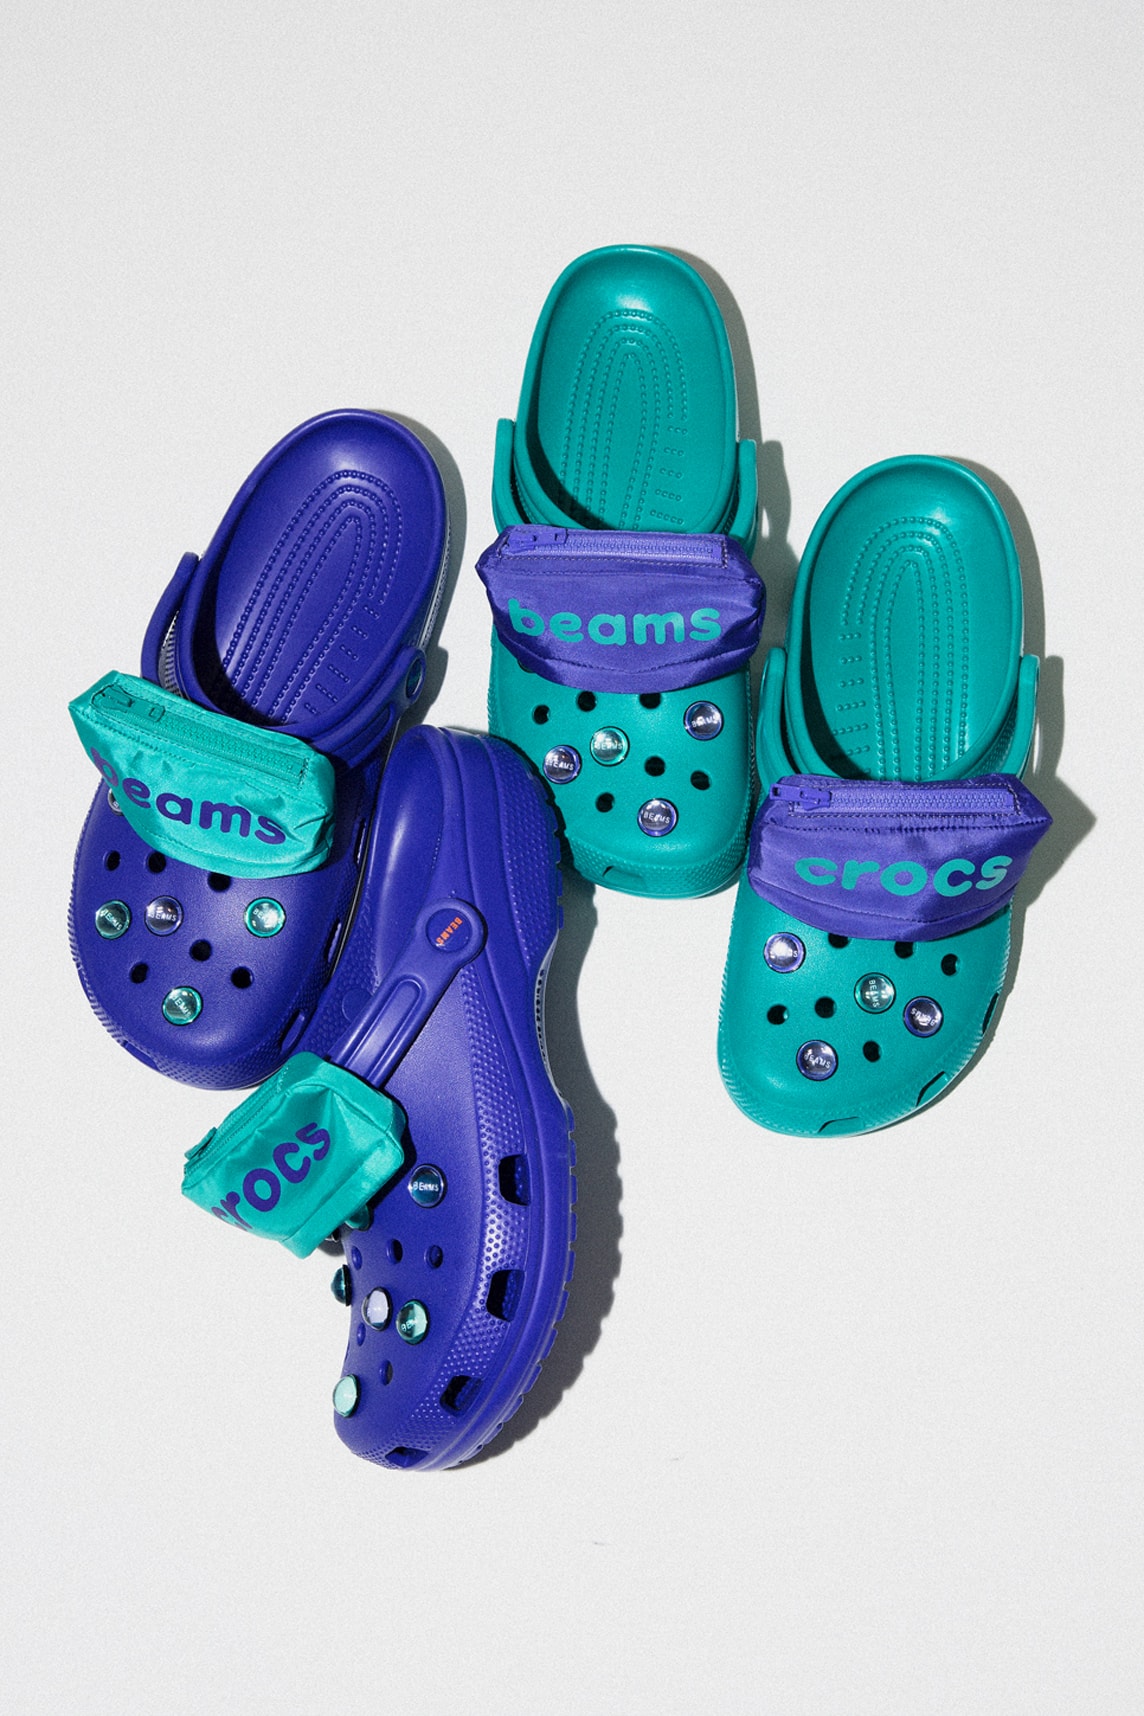 BEAMS x Crocs Release Footwear Collaboration | Hypebae